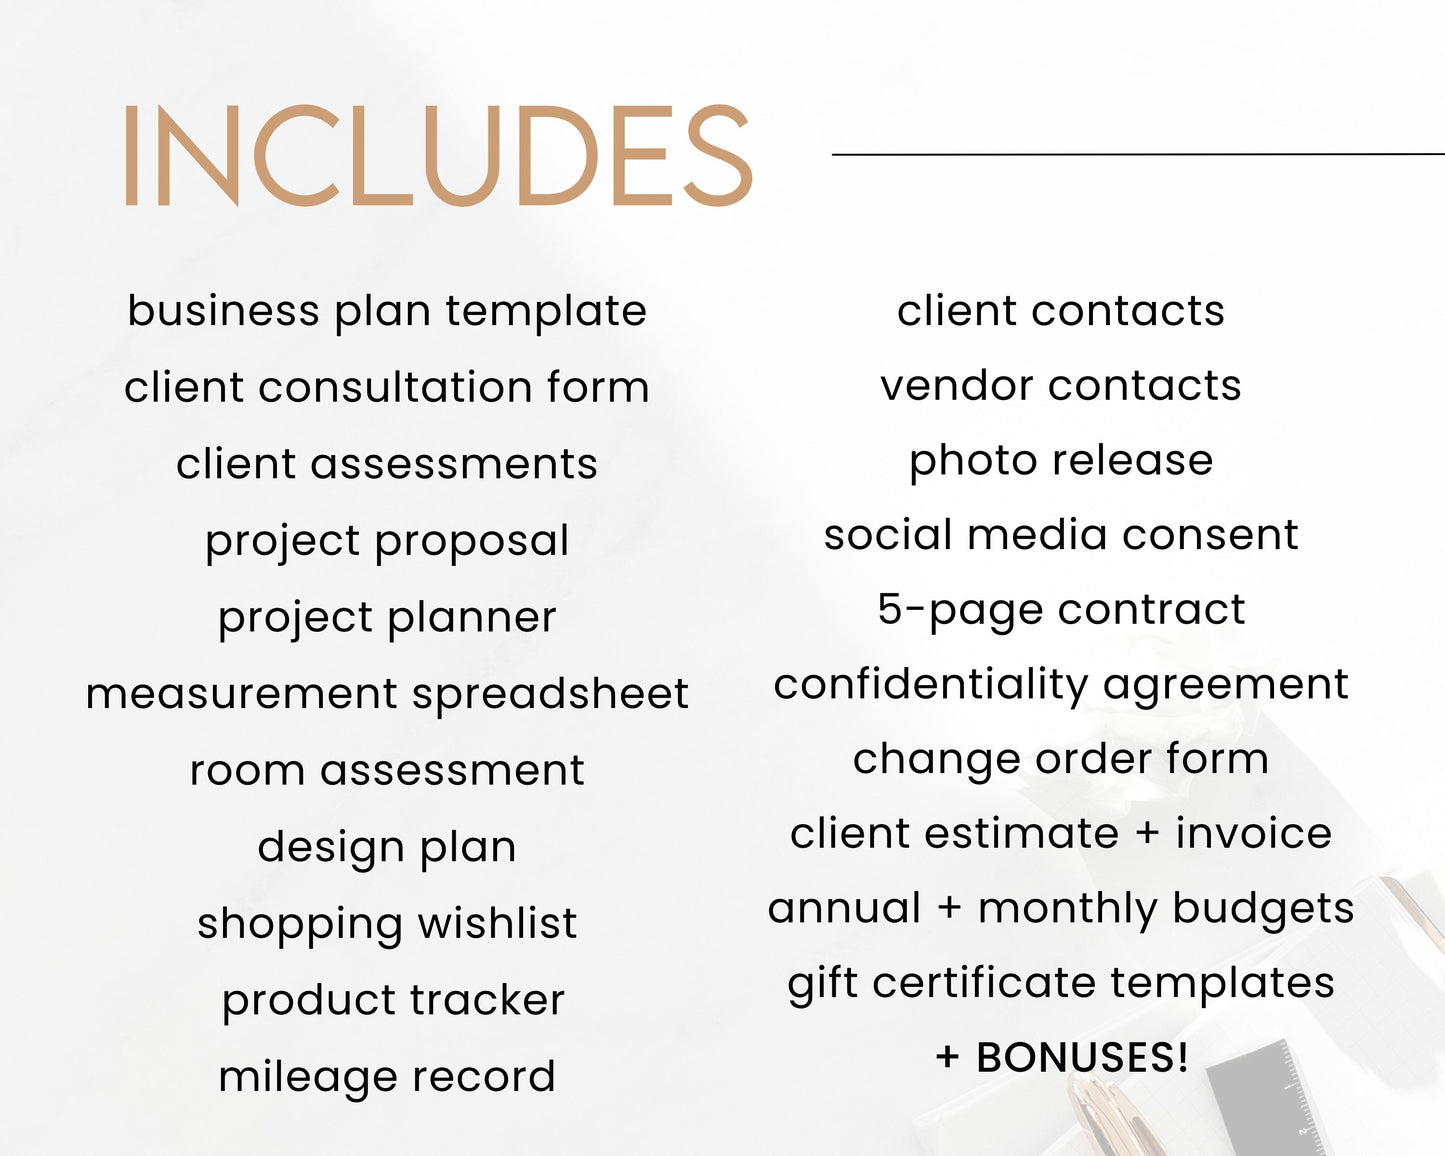 Professional Organizer Business Bundle | Customizable Canva Template